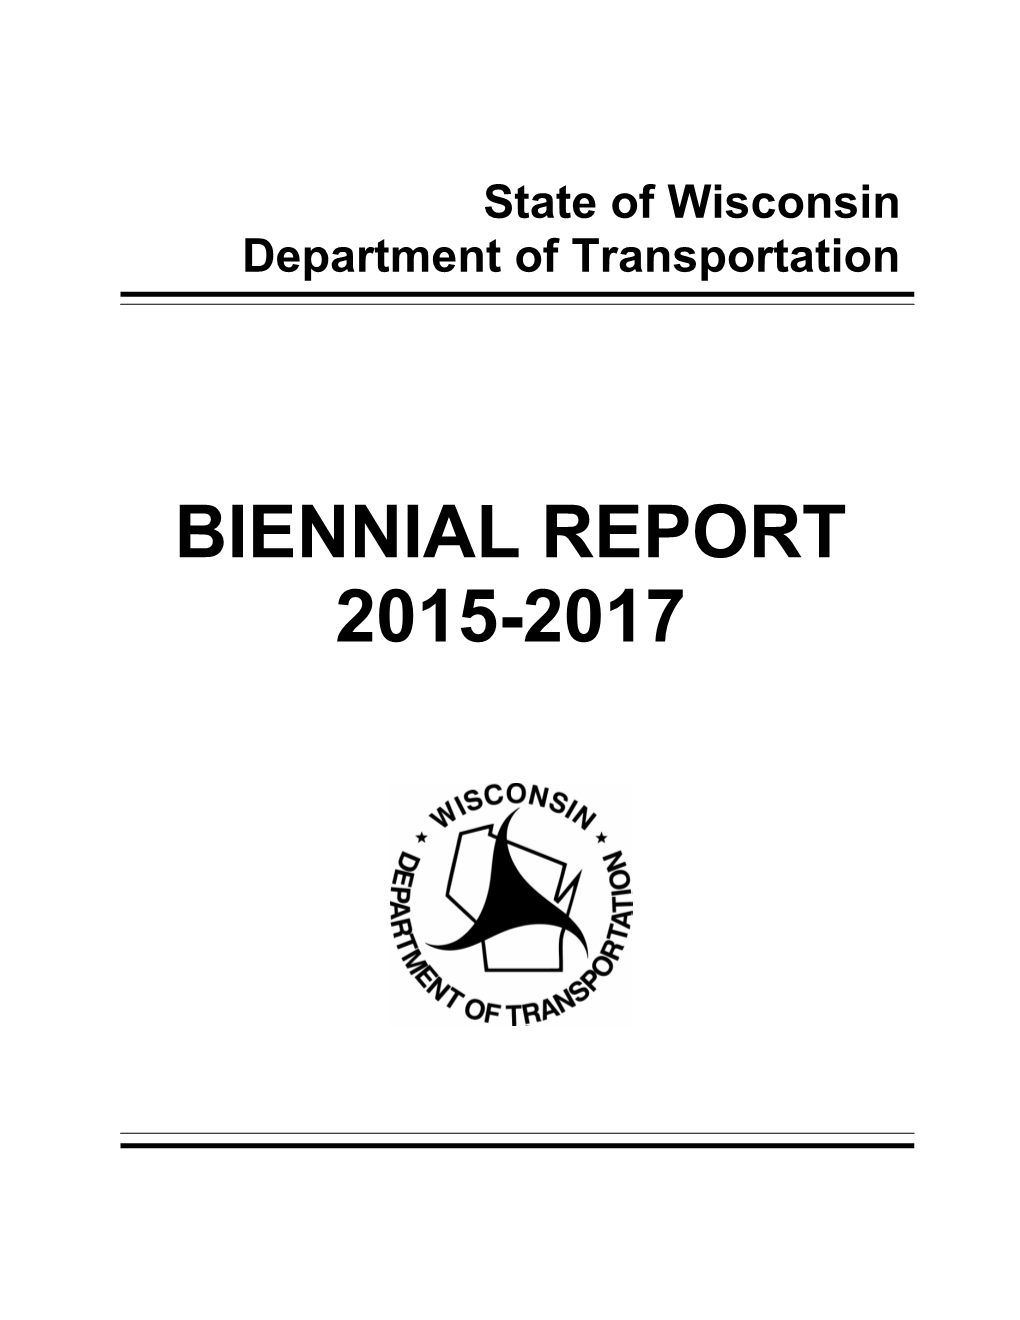 Biennial Report 2015-2017